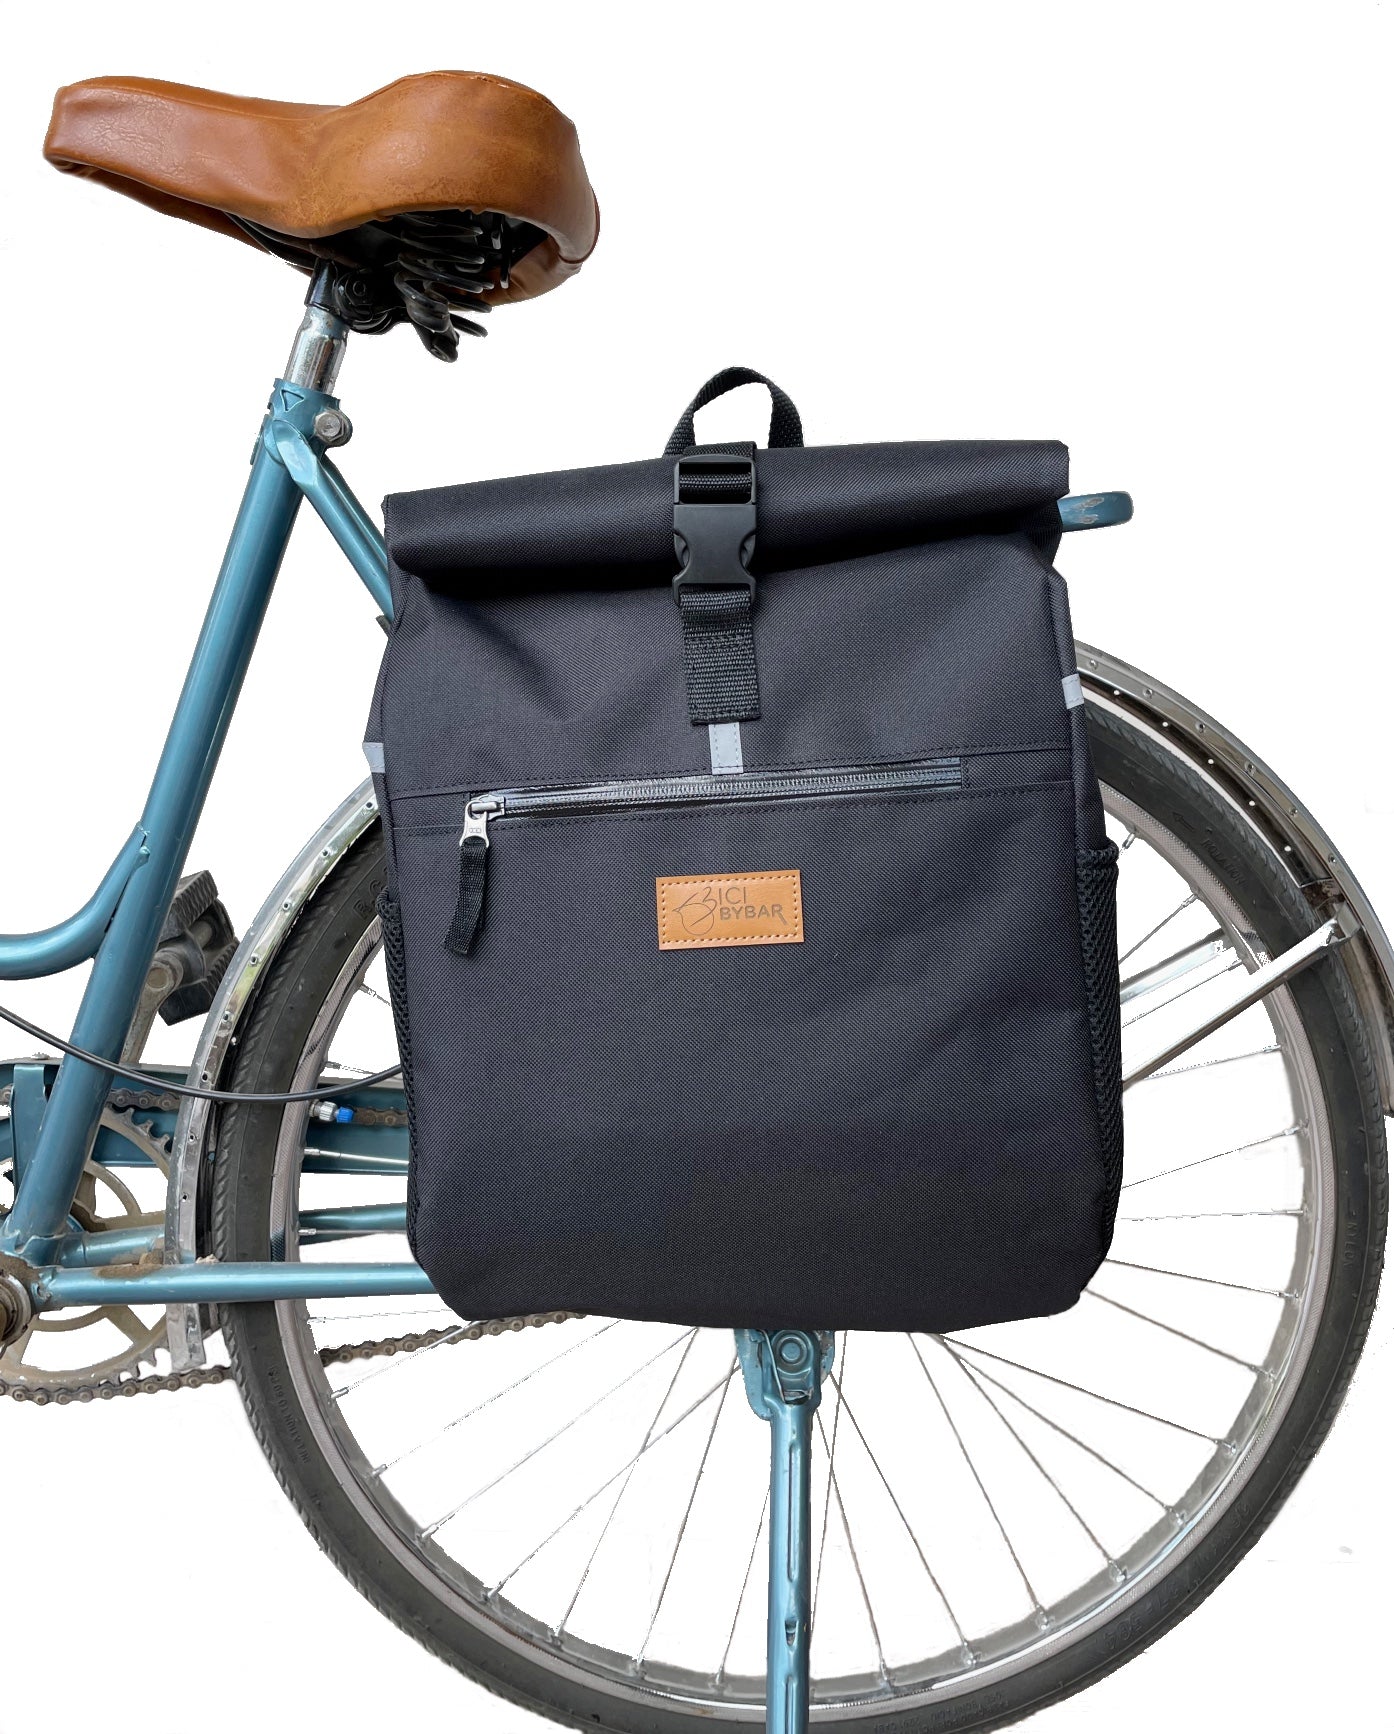 Handmade Bicycle bags, panniers and backpacks and bike goodies